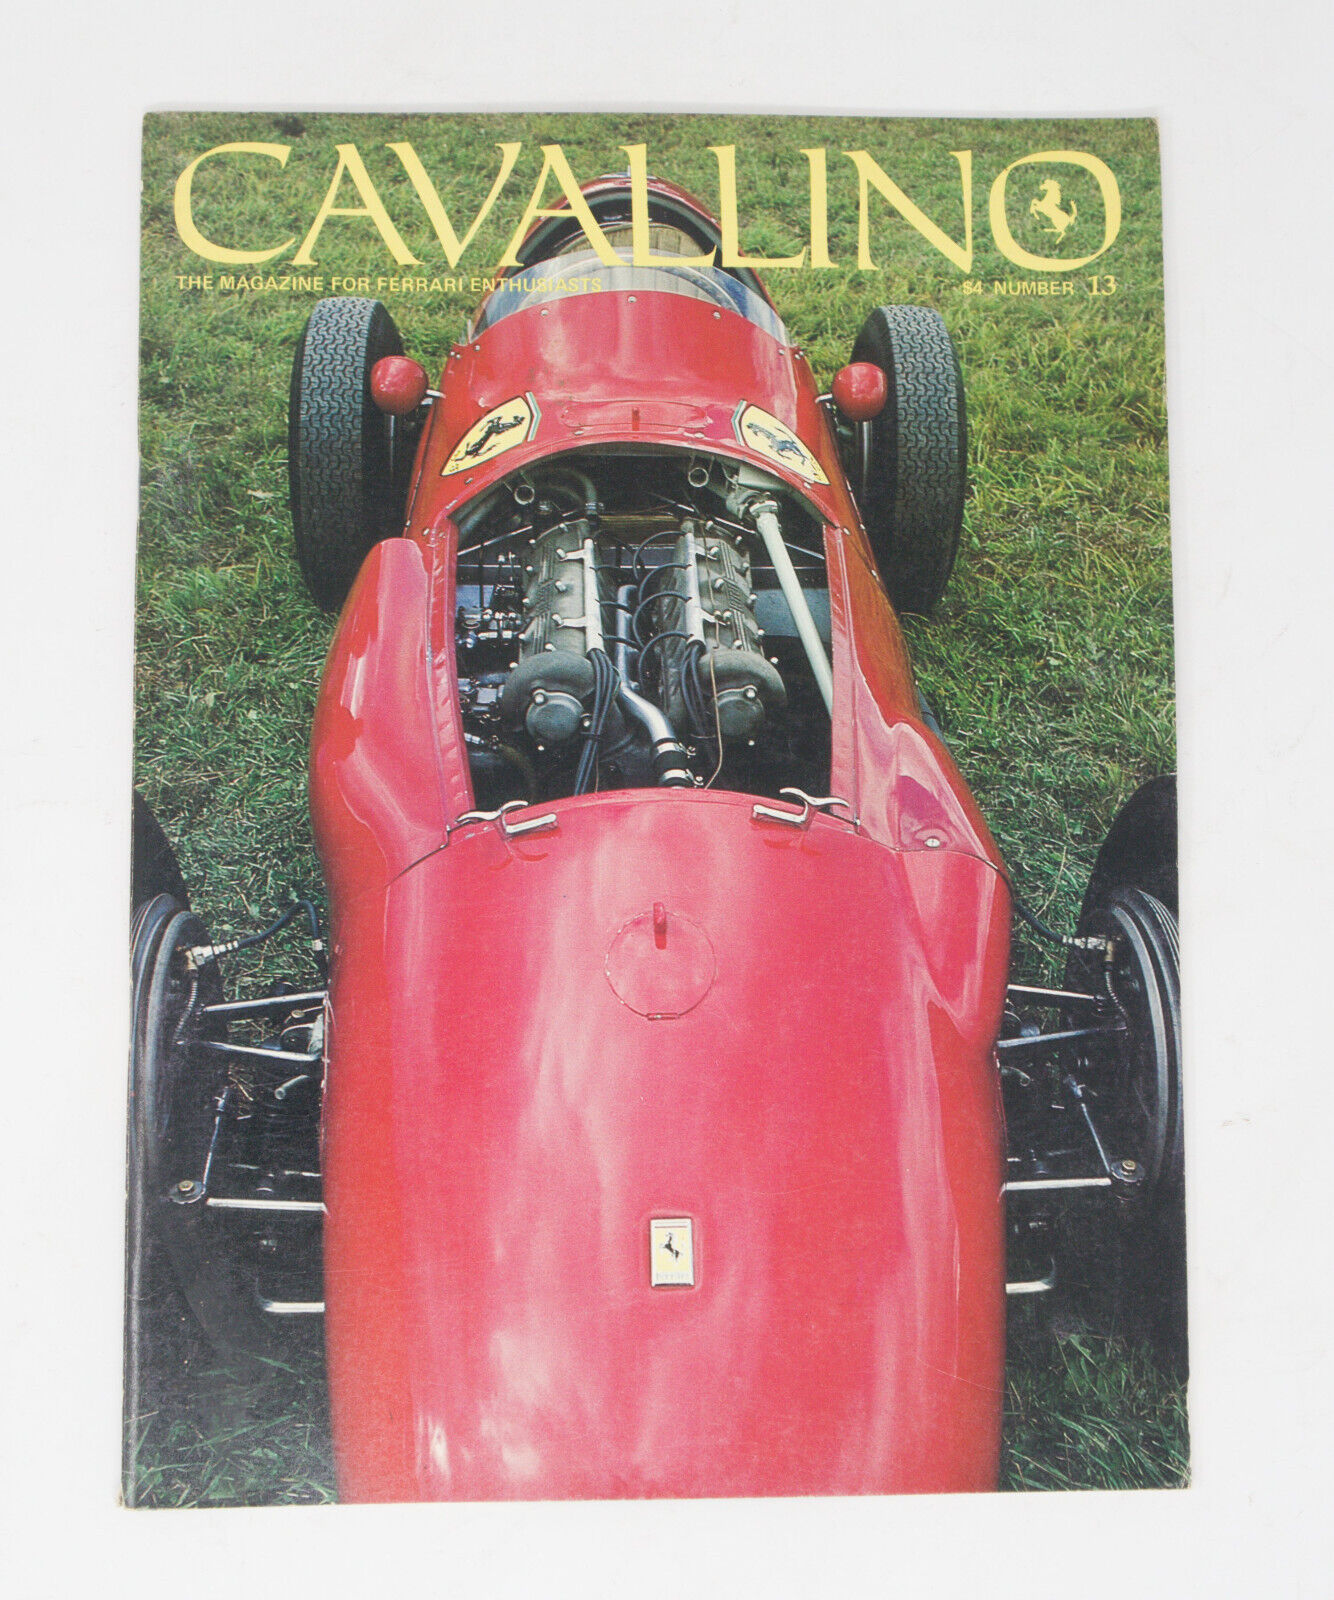 Cavallino magazine No. 13 July/December 1981 Ferrari 625 275 GTS 512 S